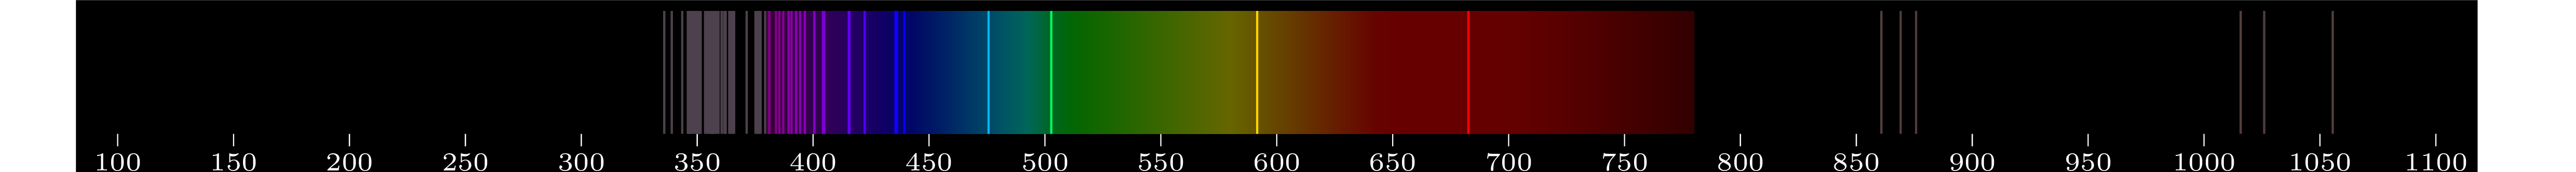 emmision spectra of element U